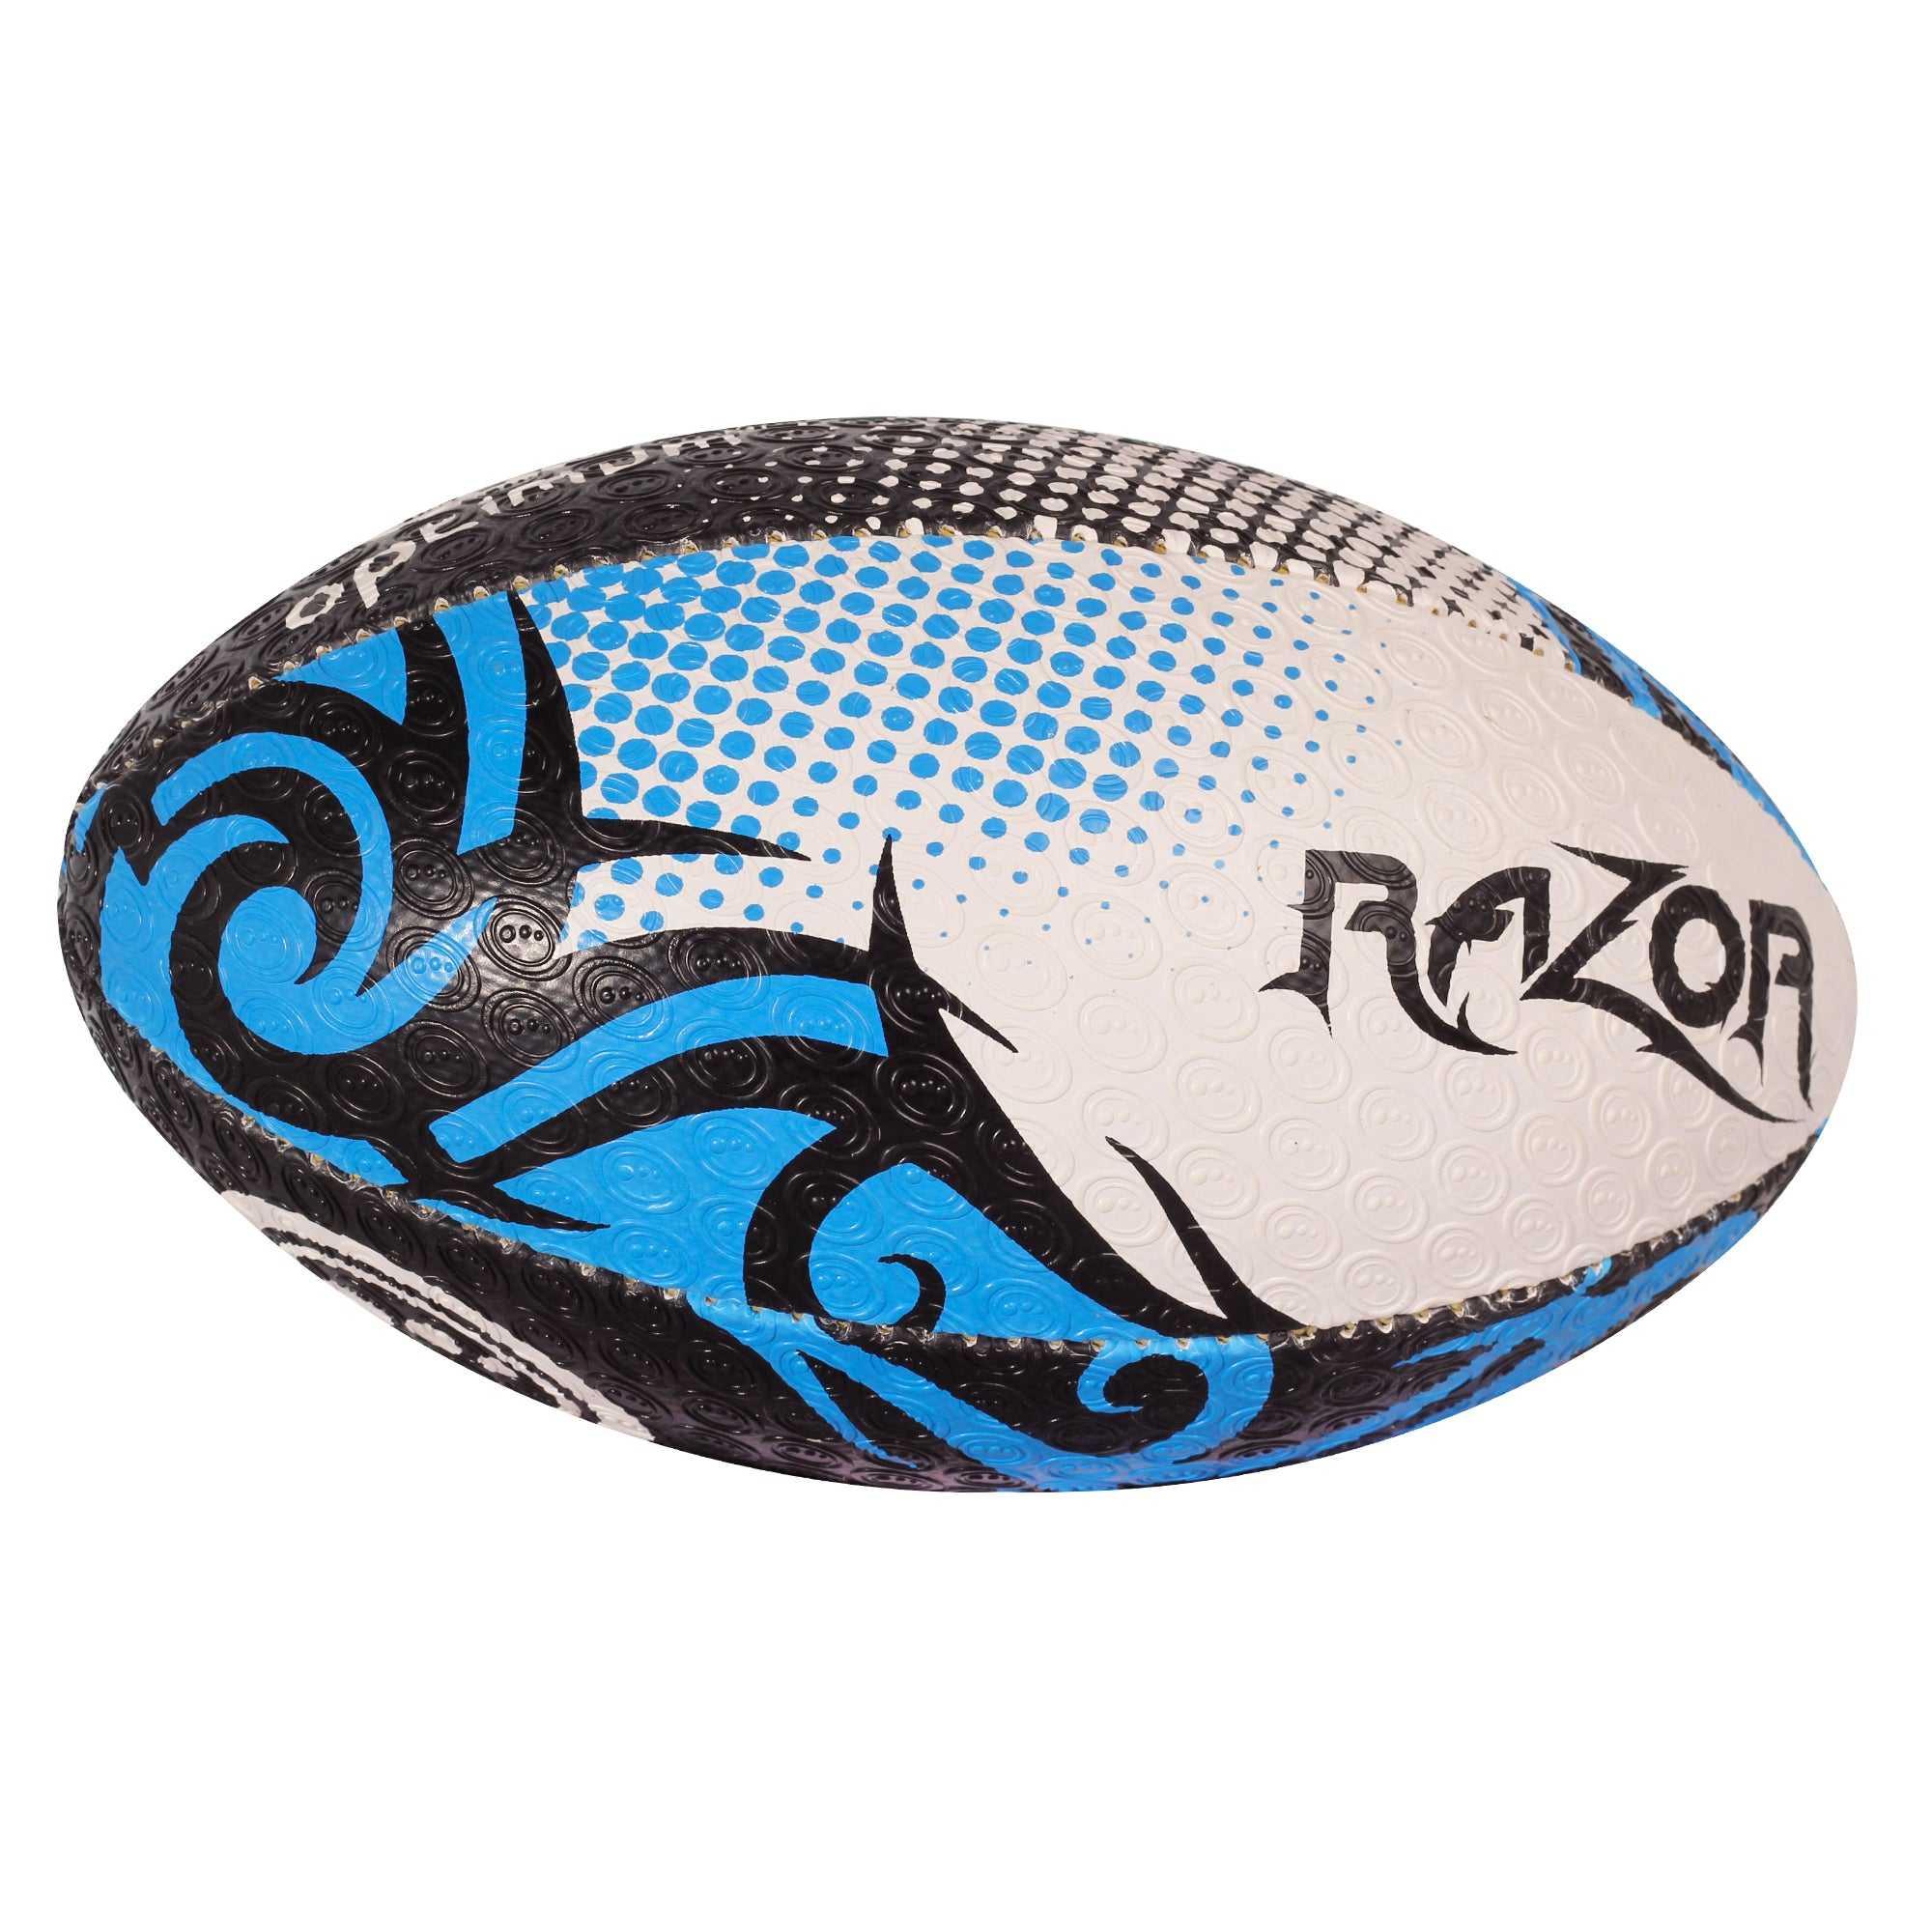 Bulk Razor Rugby Ball Blue - 10/20/30 Pack - Free Carrier and Pump - Optimum